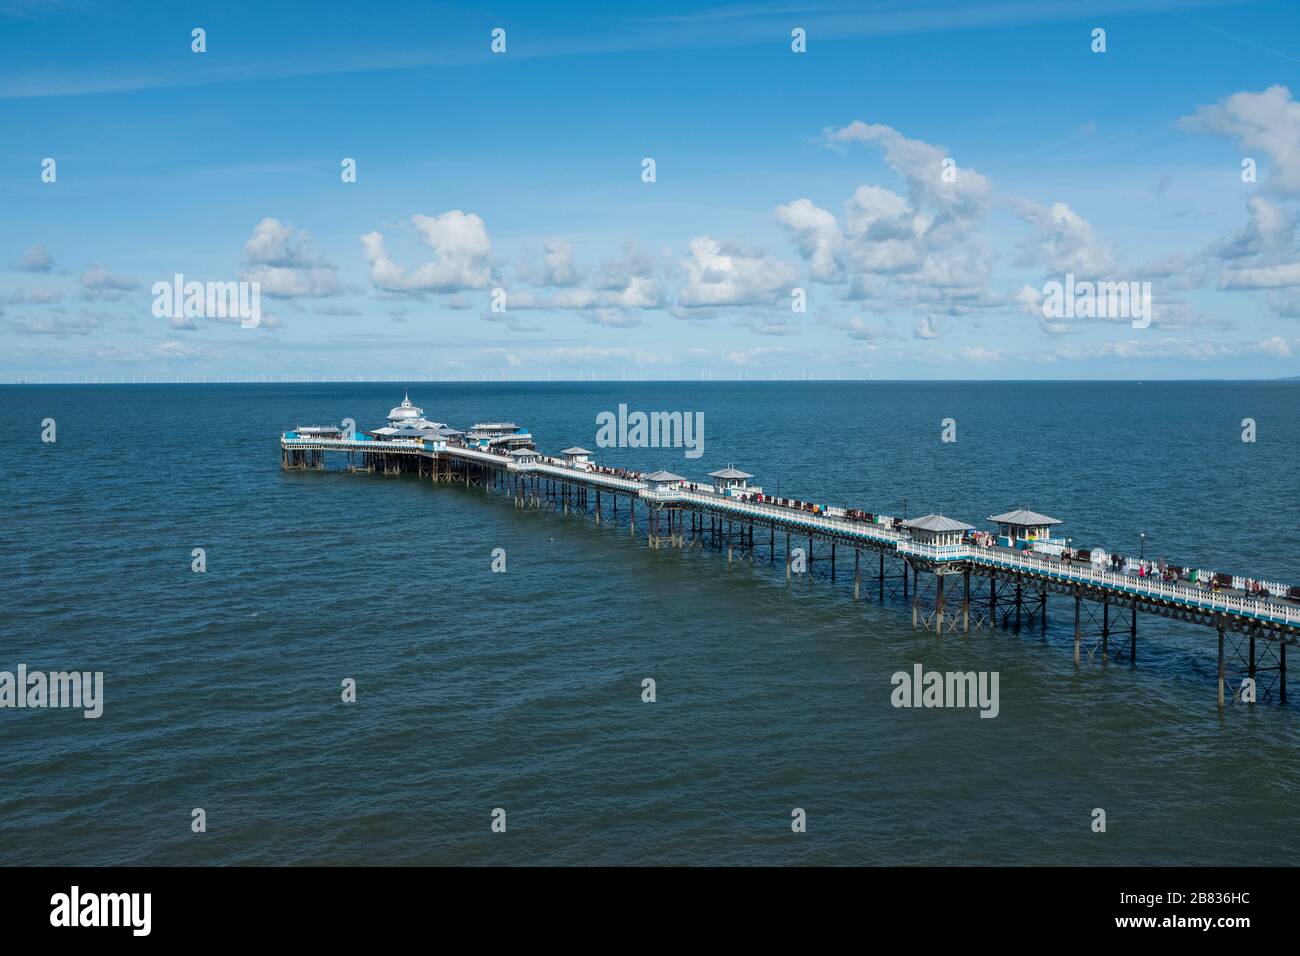 Llandudno pier stretching into the Irish Sea, Wales, UK Stock Photo